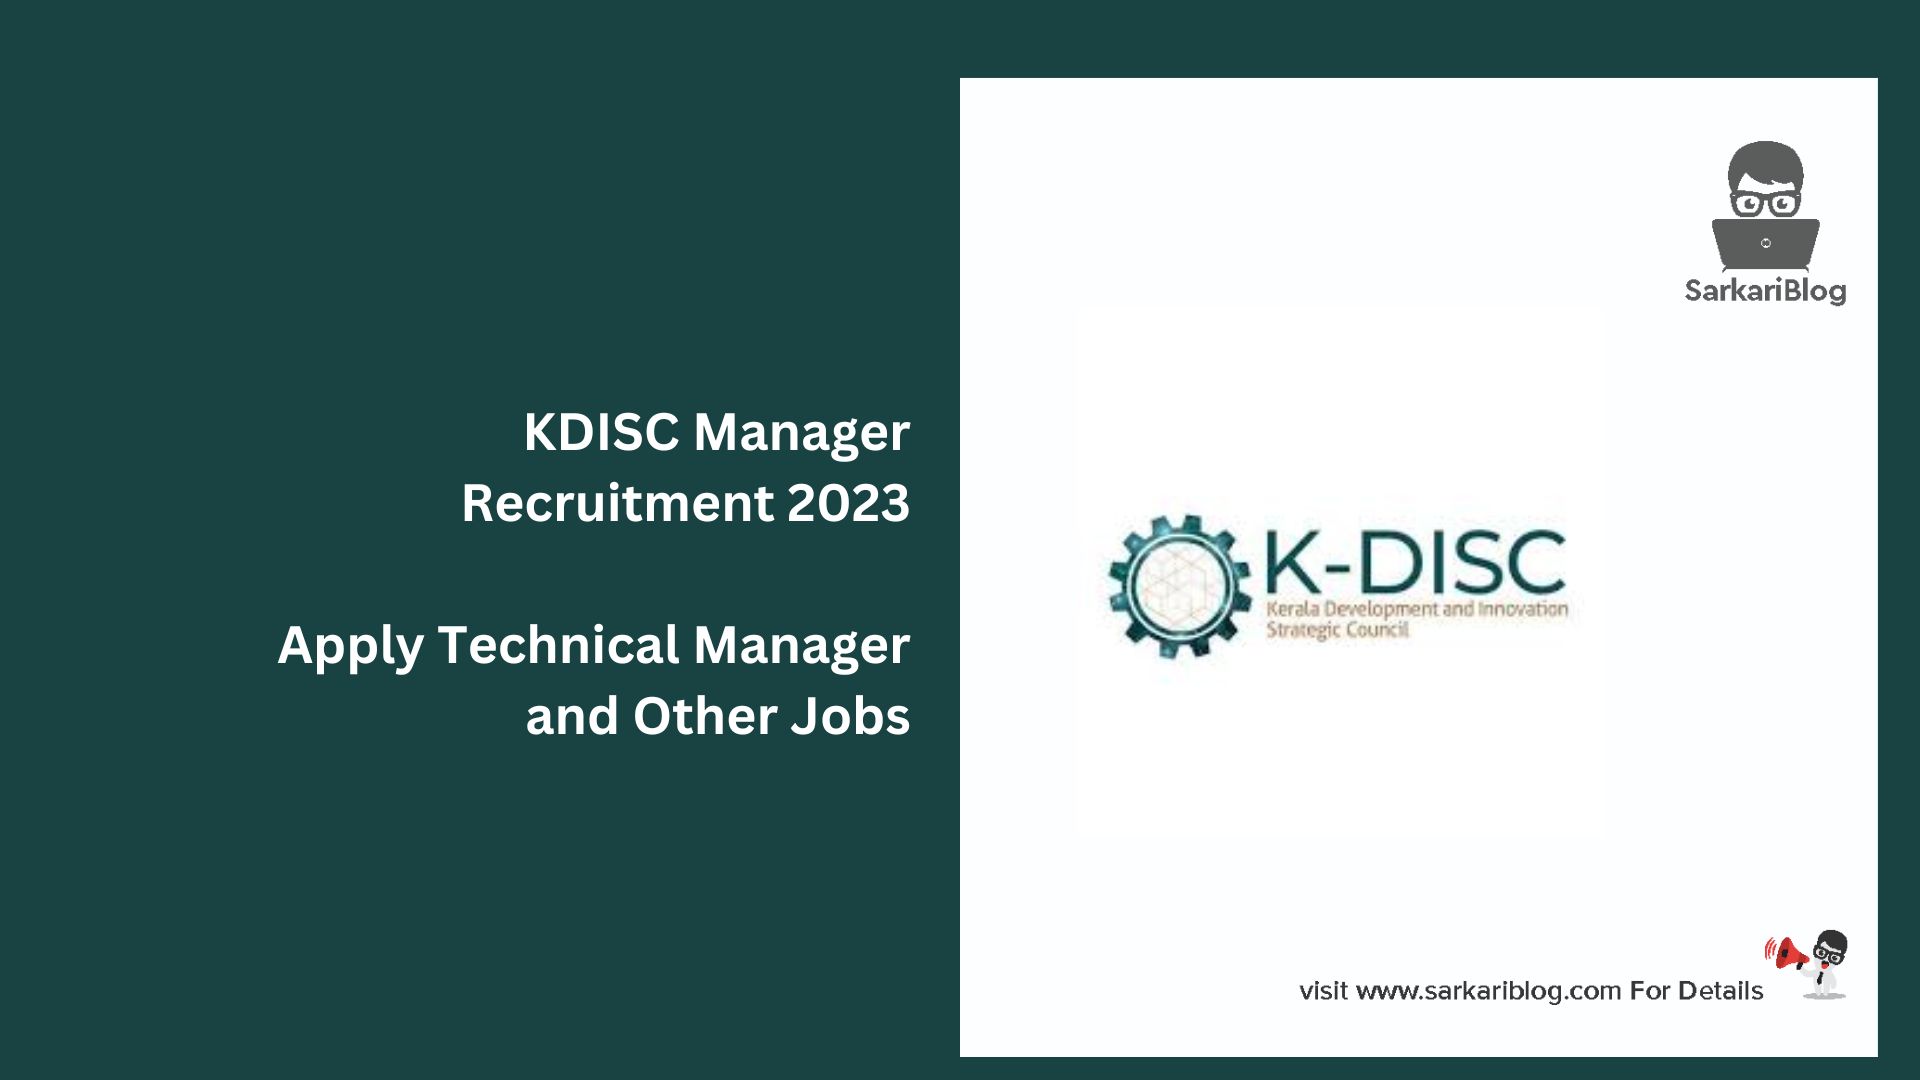 KDISC Manager Recruitment 2023